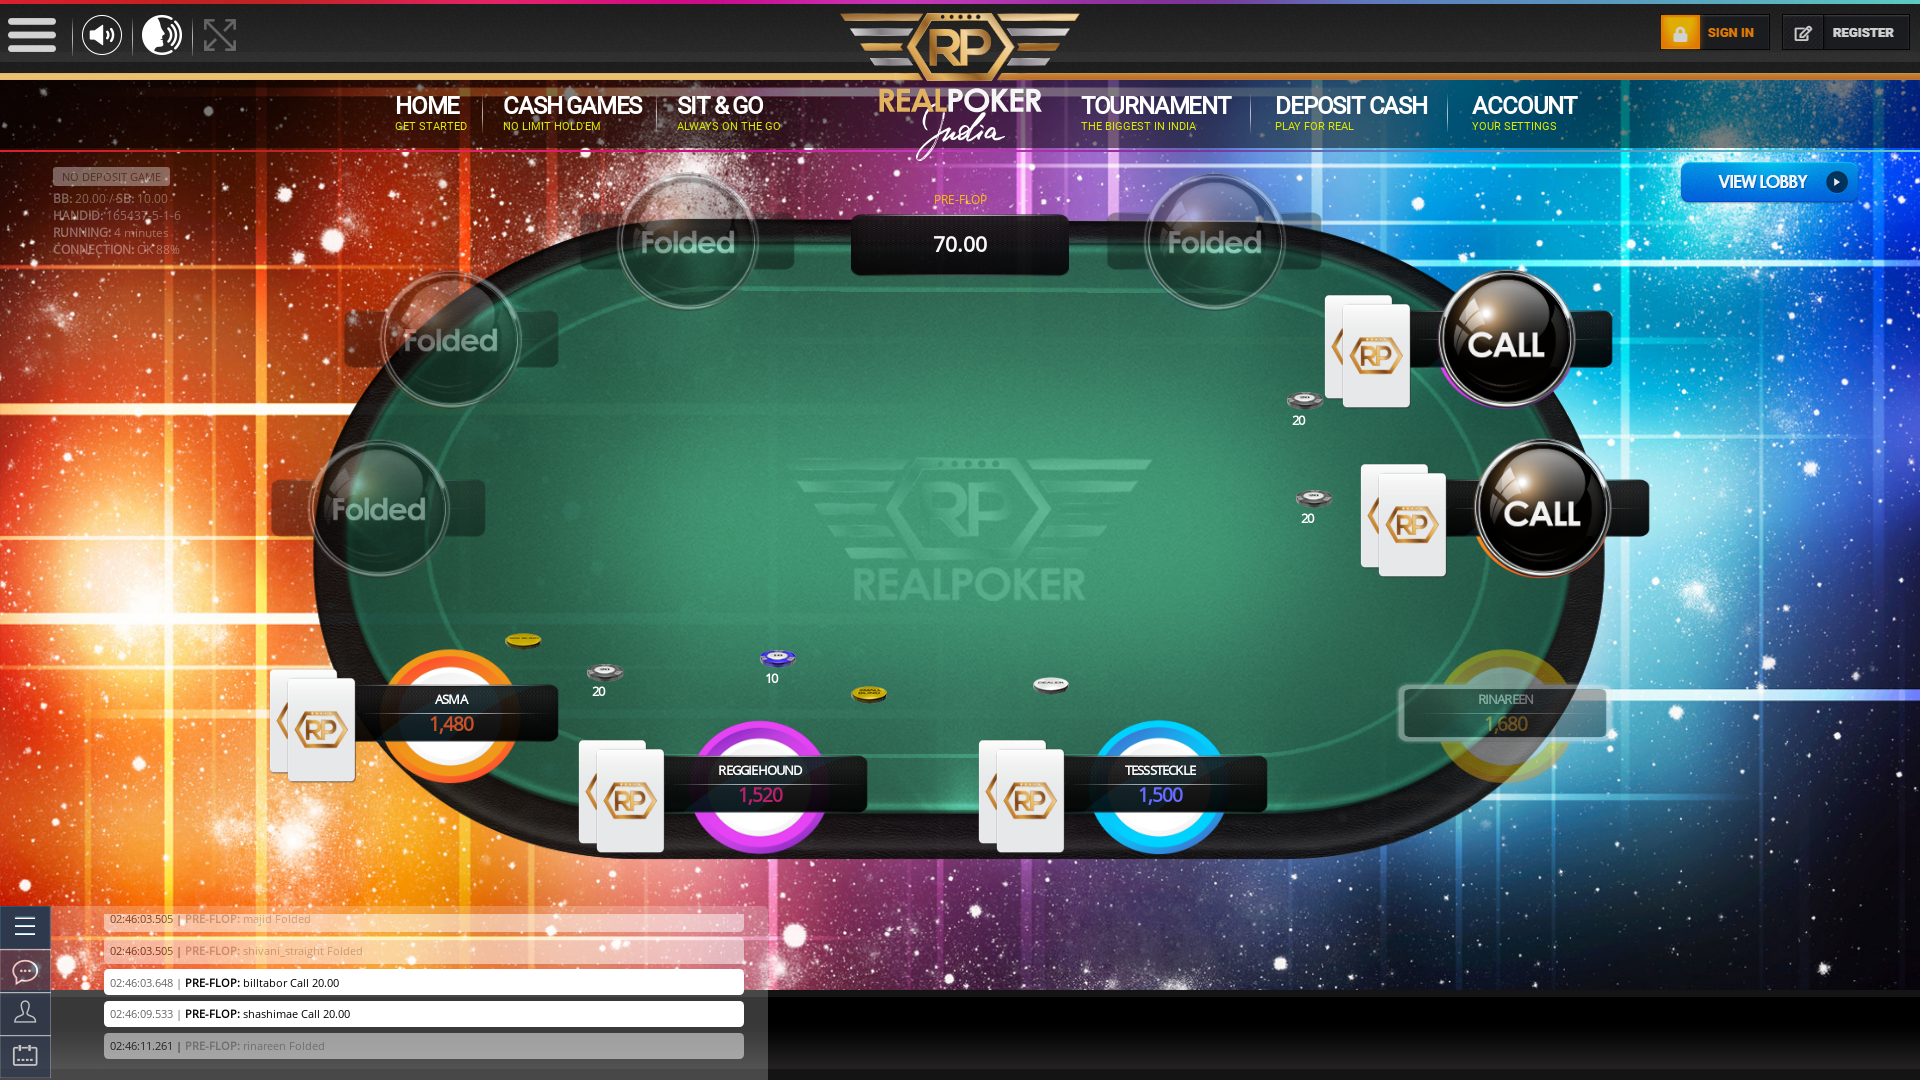 shivani_straight playing online poker on the Bardez table